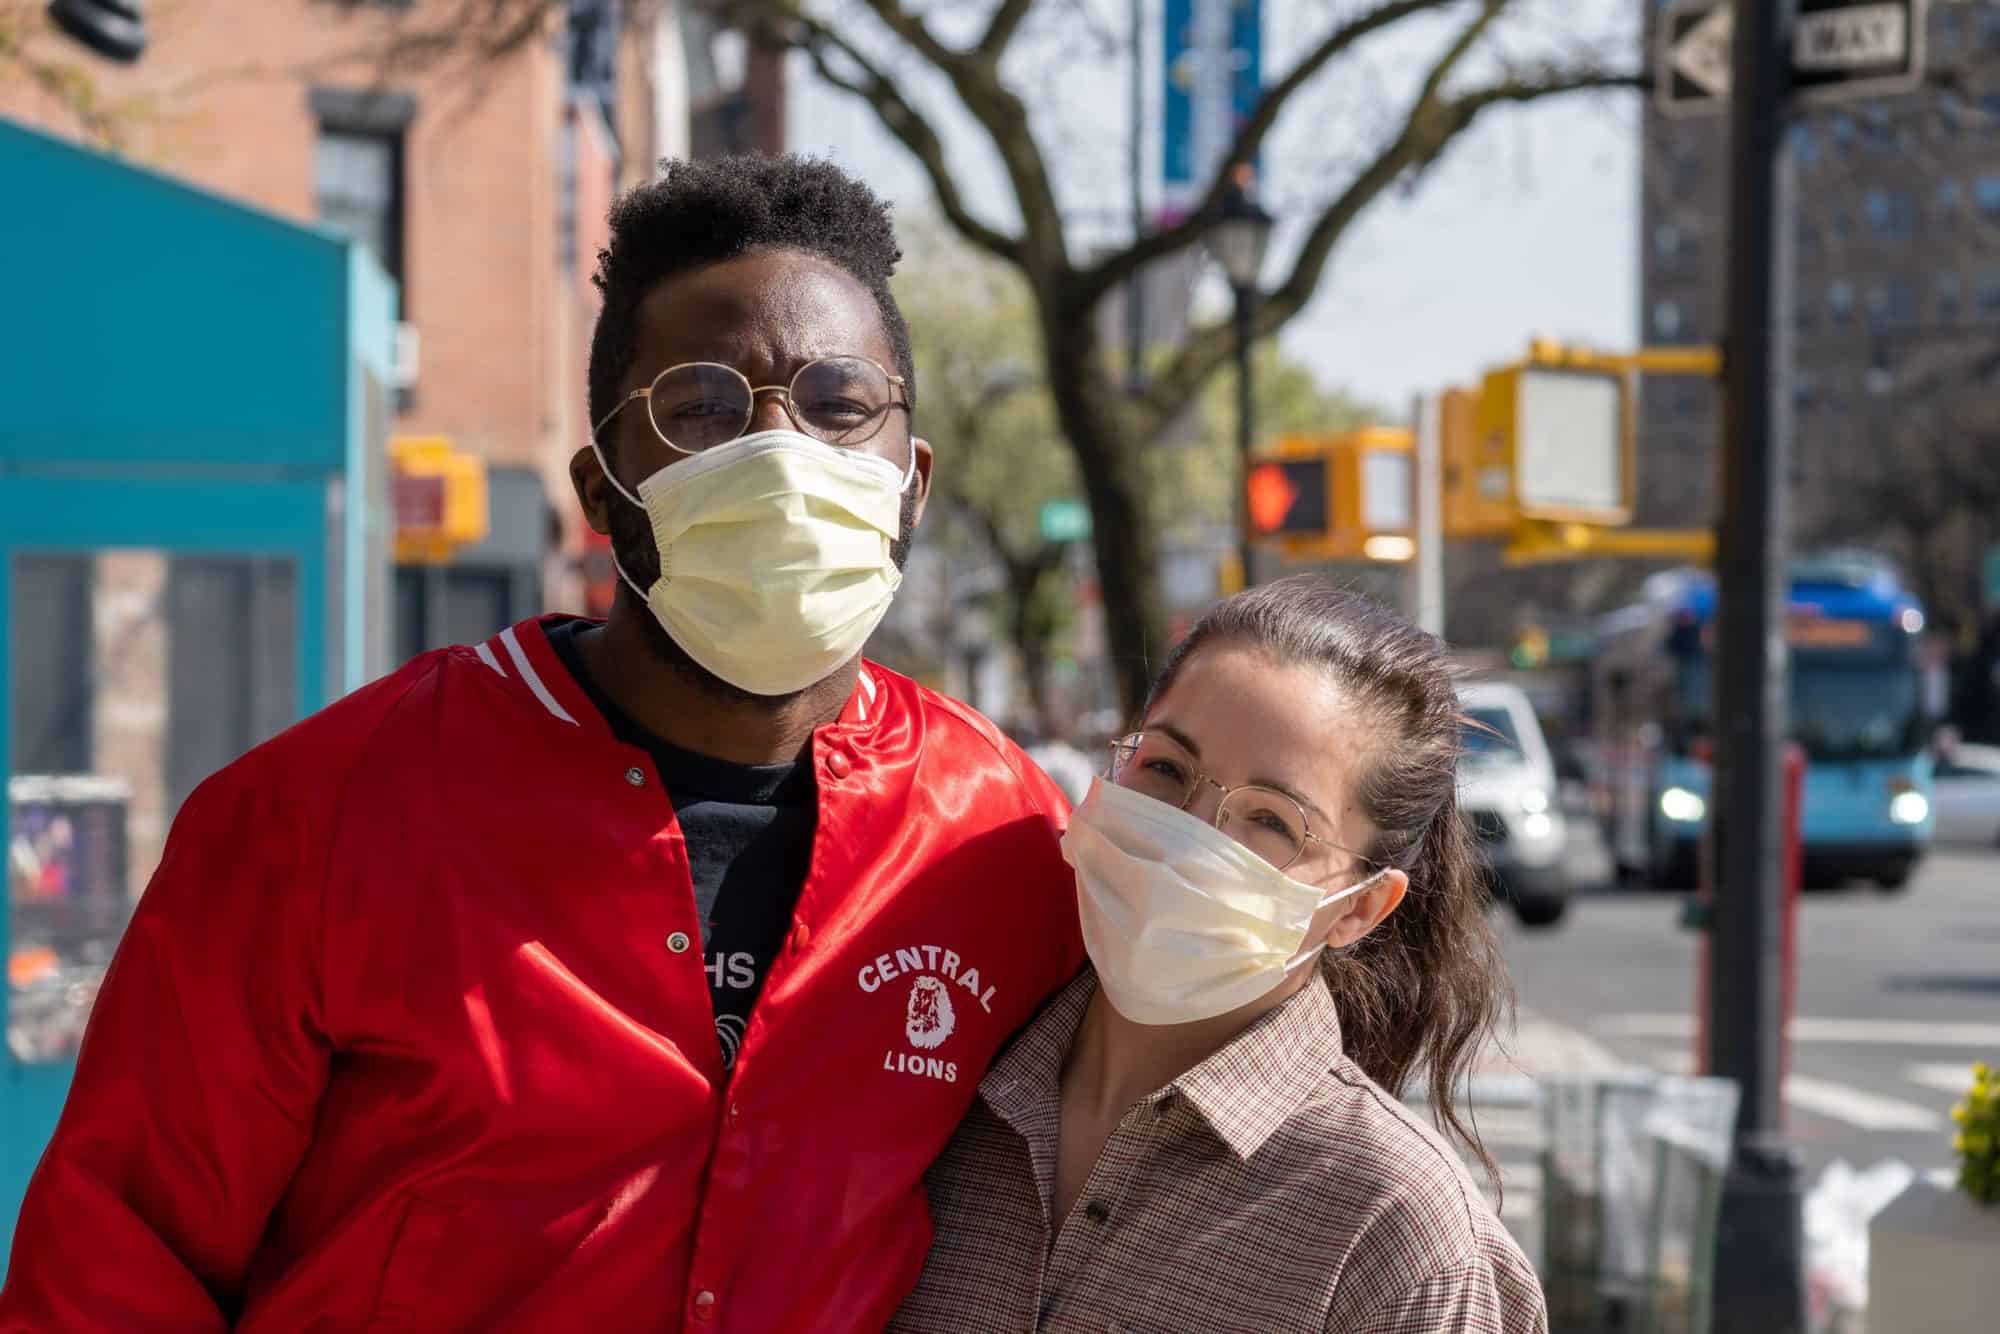 Two older students in medical facemasks pose together outside